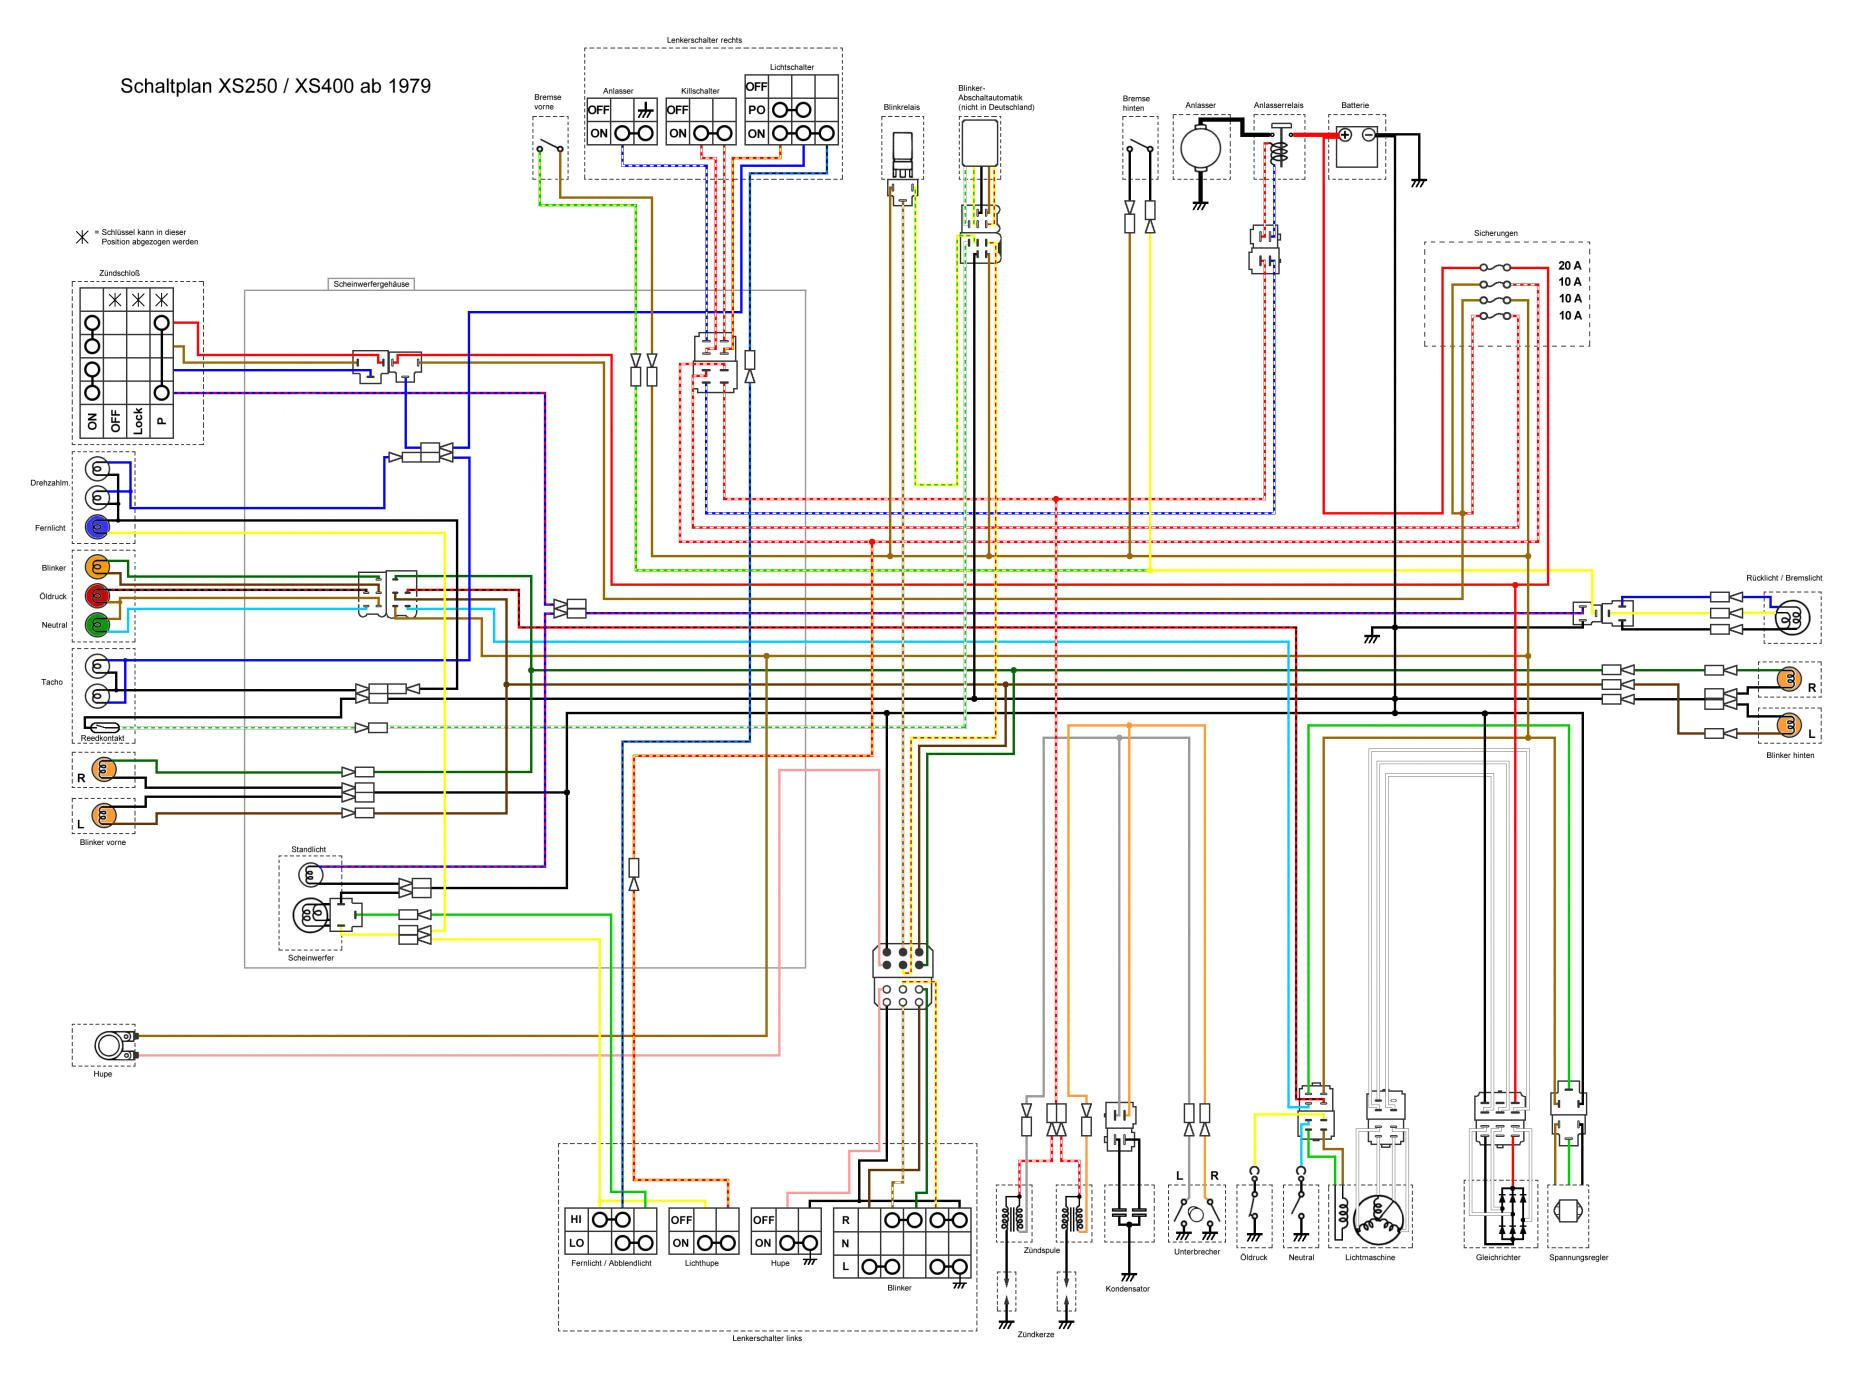 rd400 wiring diagram wiring diagram insiderd400 wiring diagram wiring diagram info rd400 wiring diagram